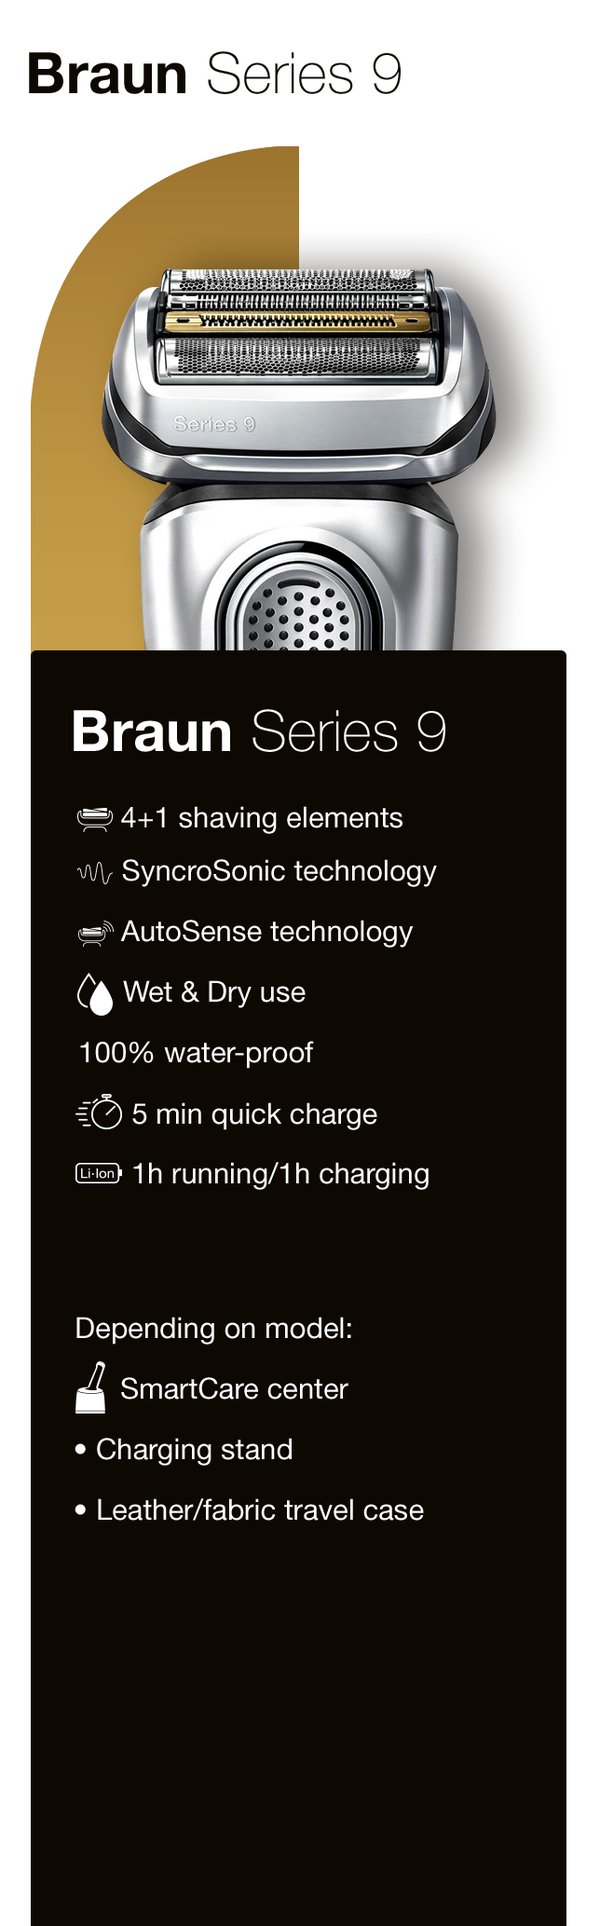 Braun Series 9 electric shaver USP's